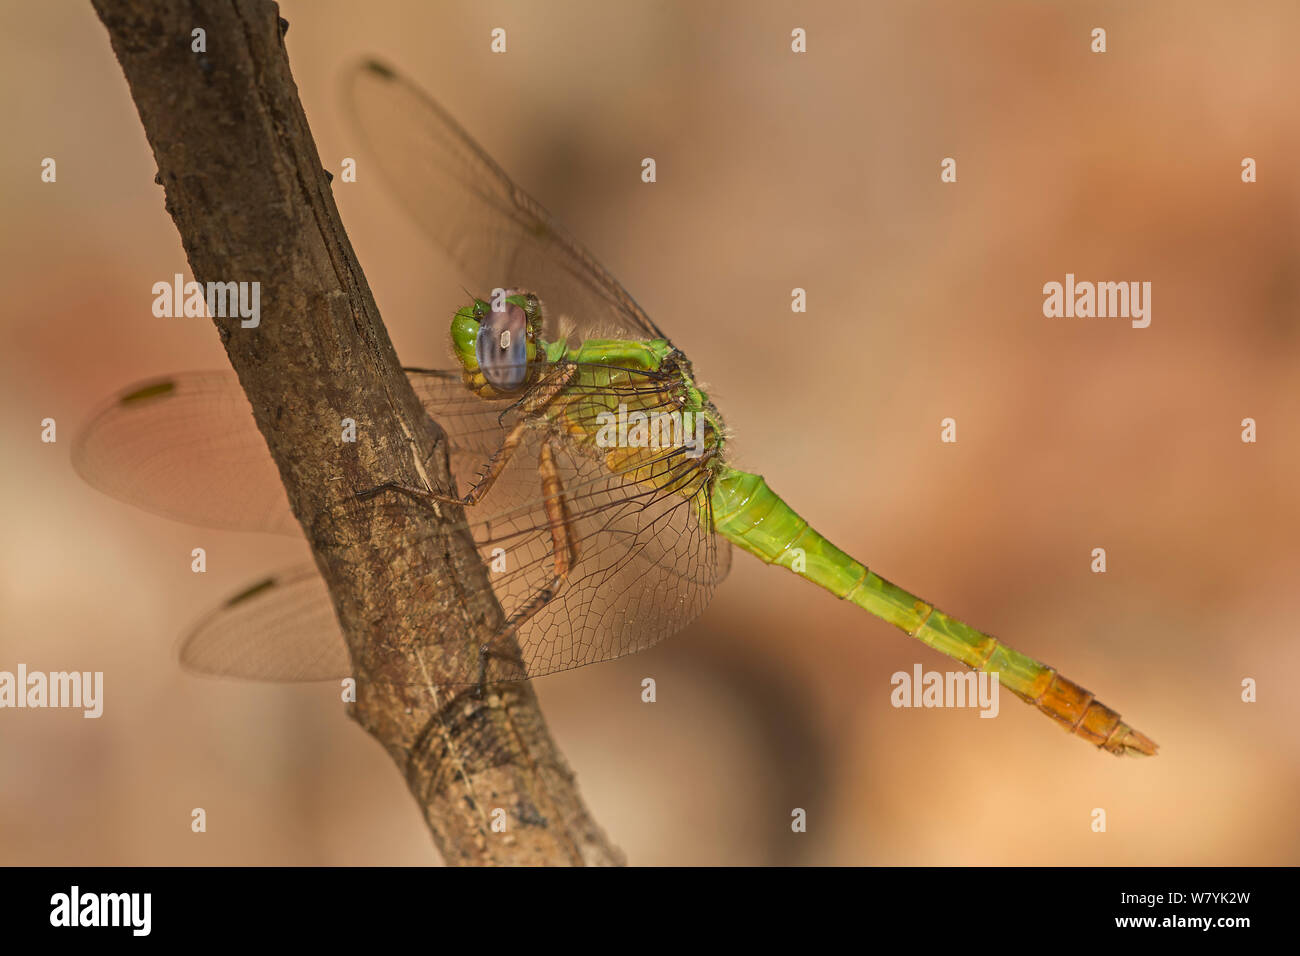 Greenbolt dragonfly (Viriditemis viridula), Kinrindy forest, Madagascar. Stock Photo